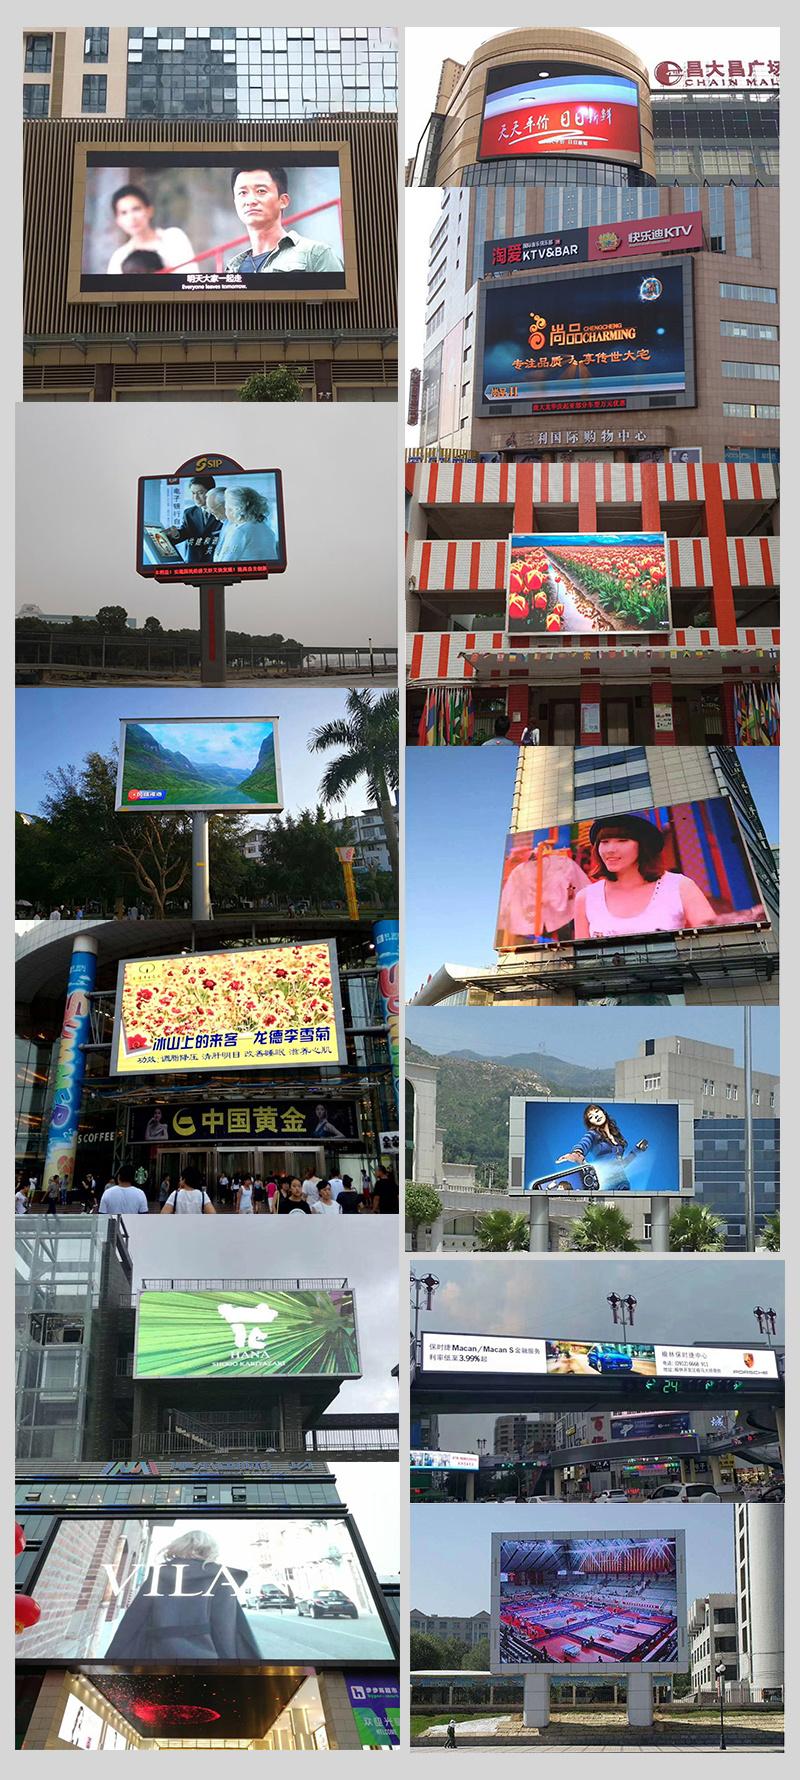 IP65 Waterproof Outdoor Digital Electronic Commercial Video Advertising LED Screen P8 LED Display Billboard